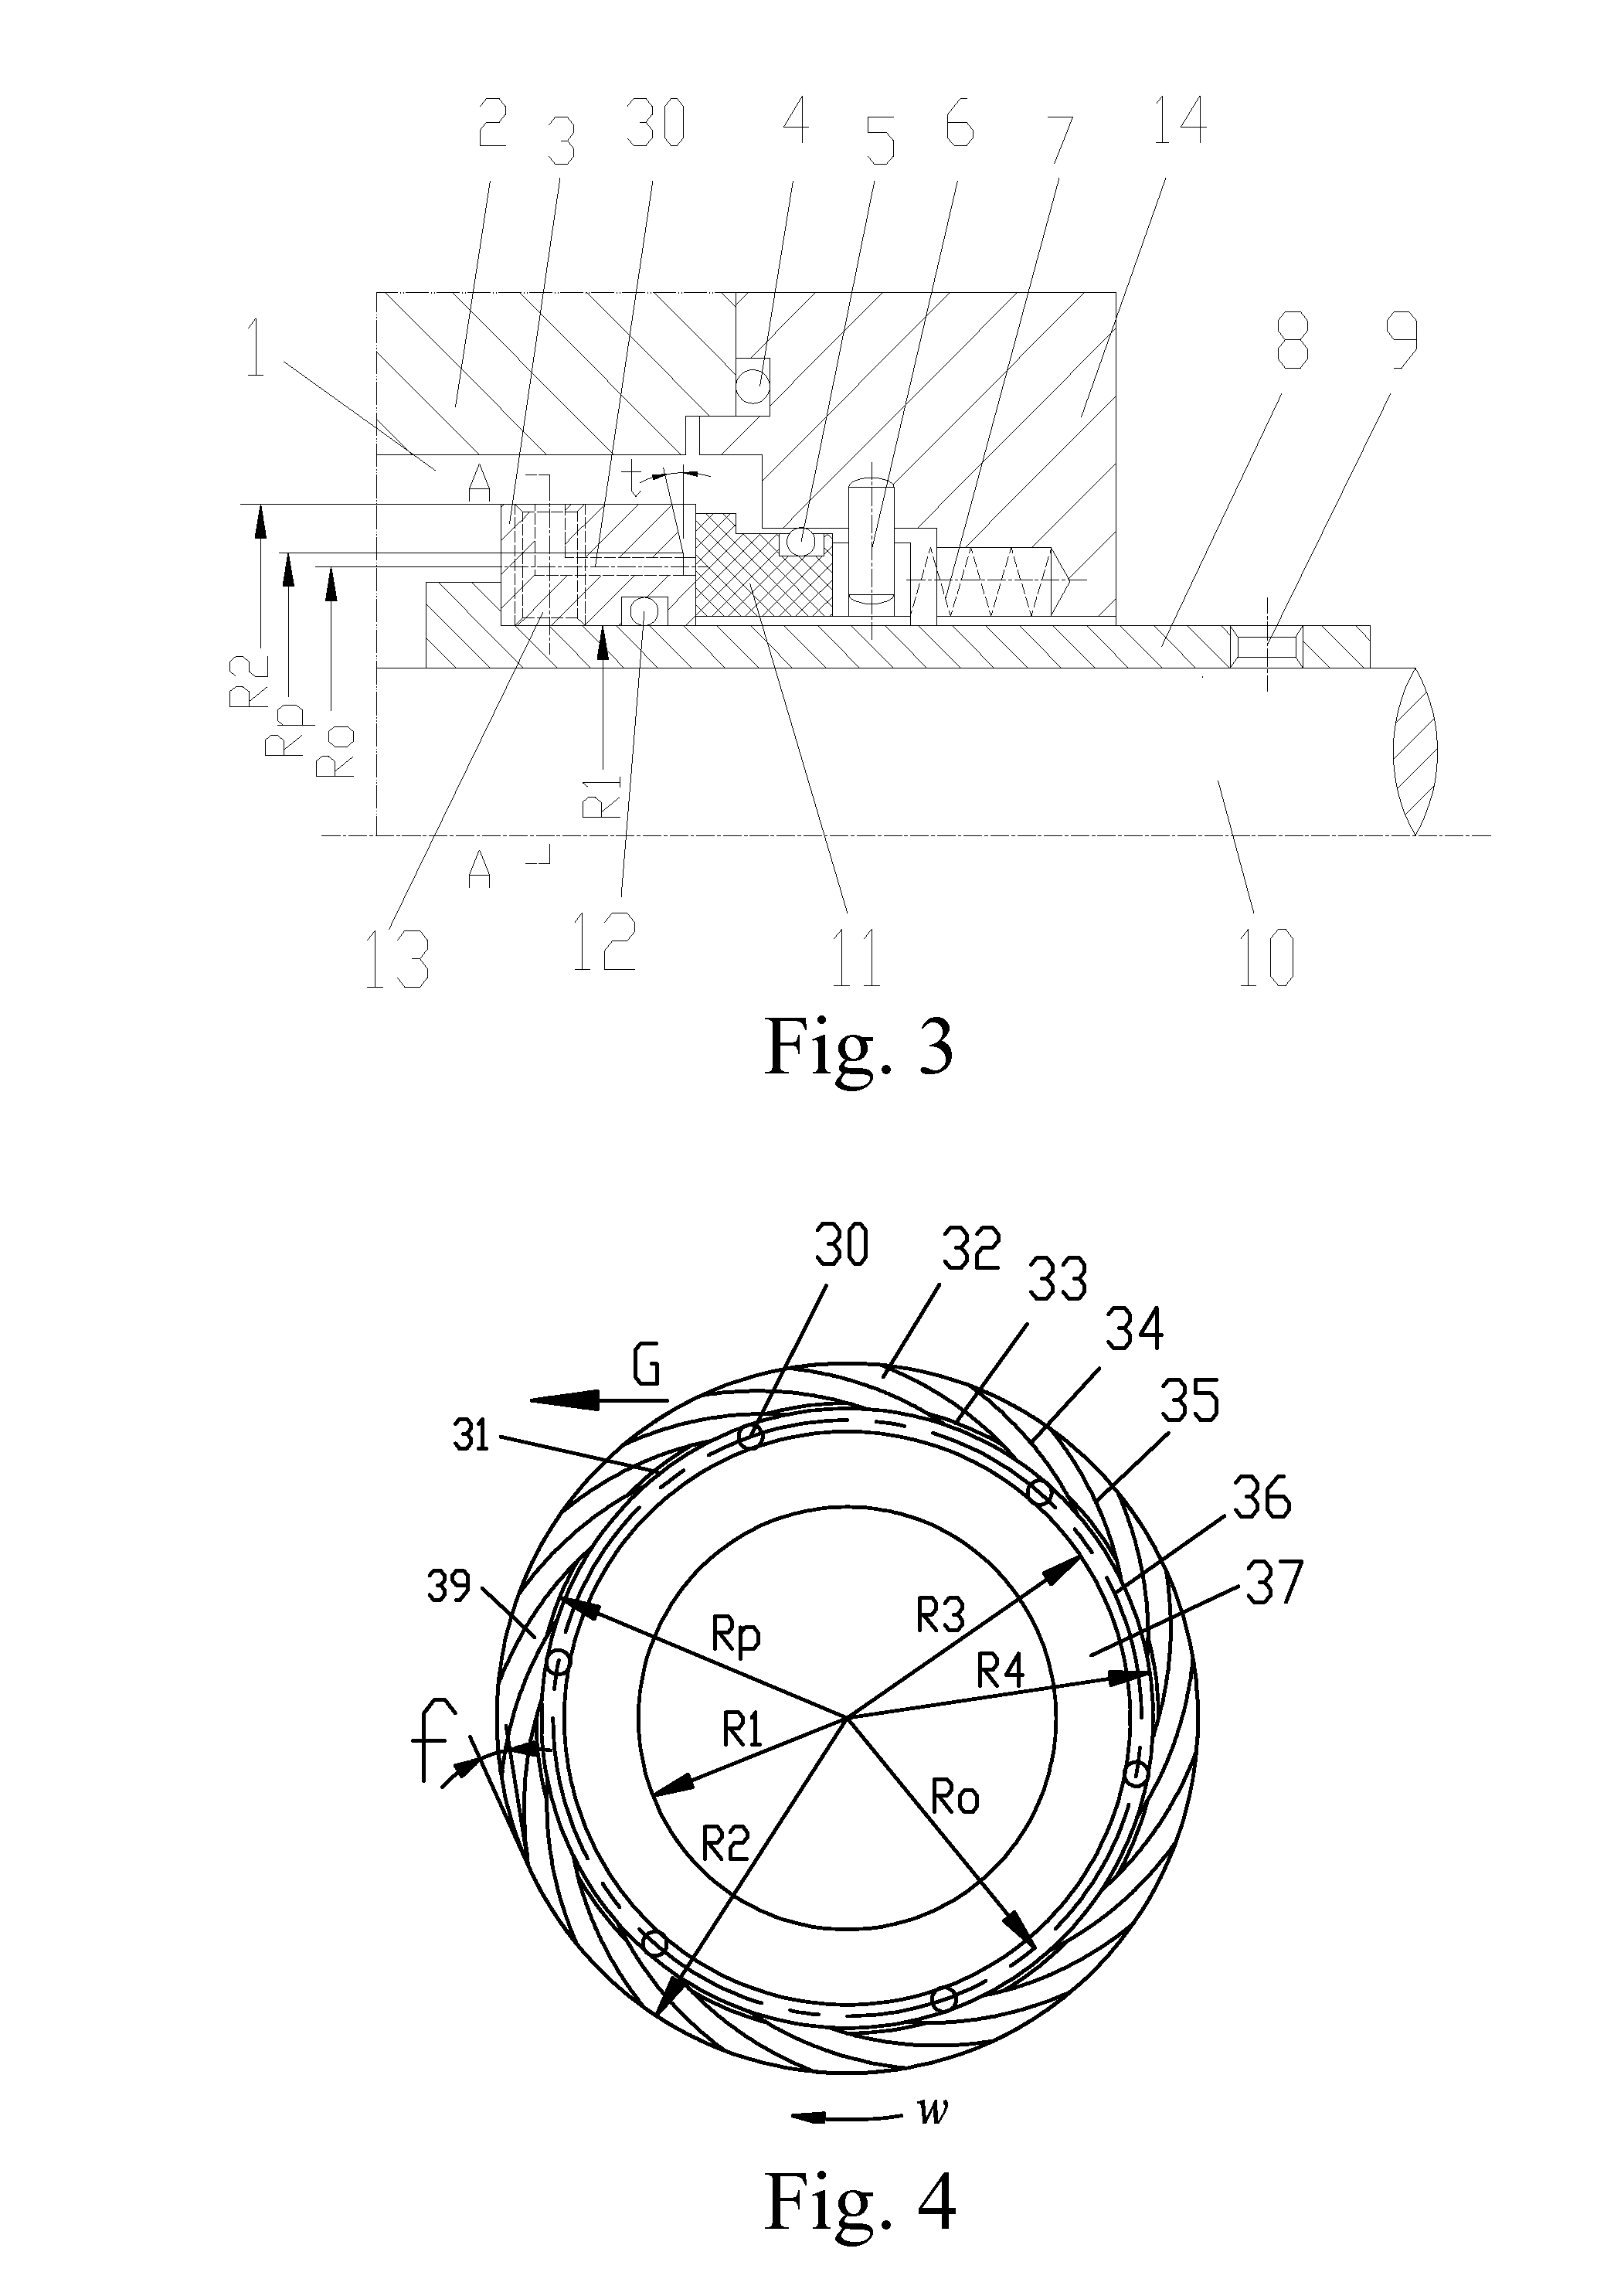 Self-pumping hydrodynamic mechanical seal